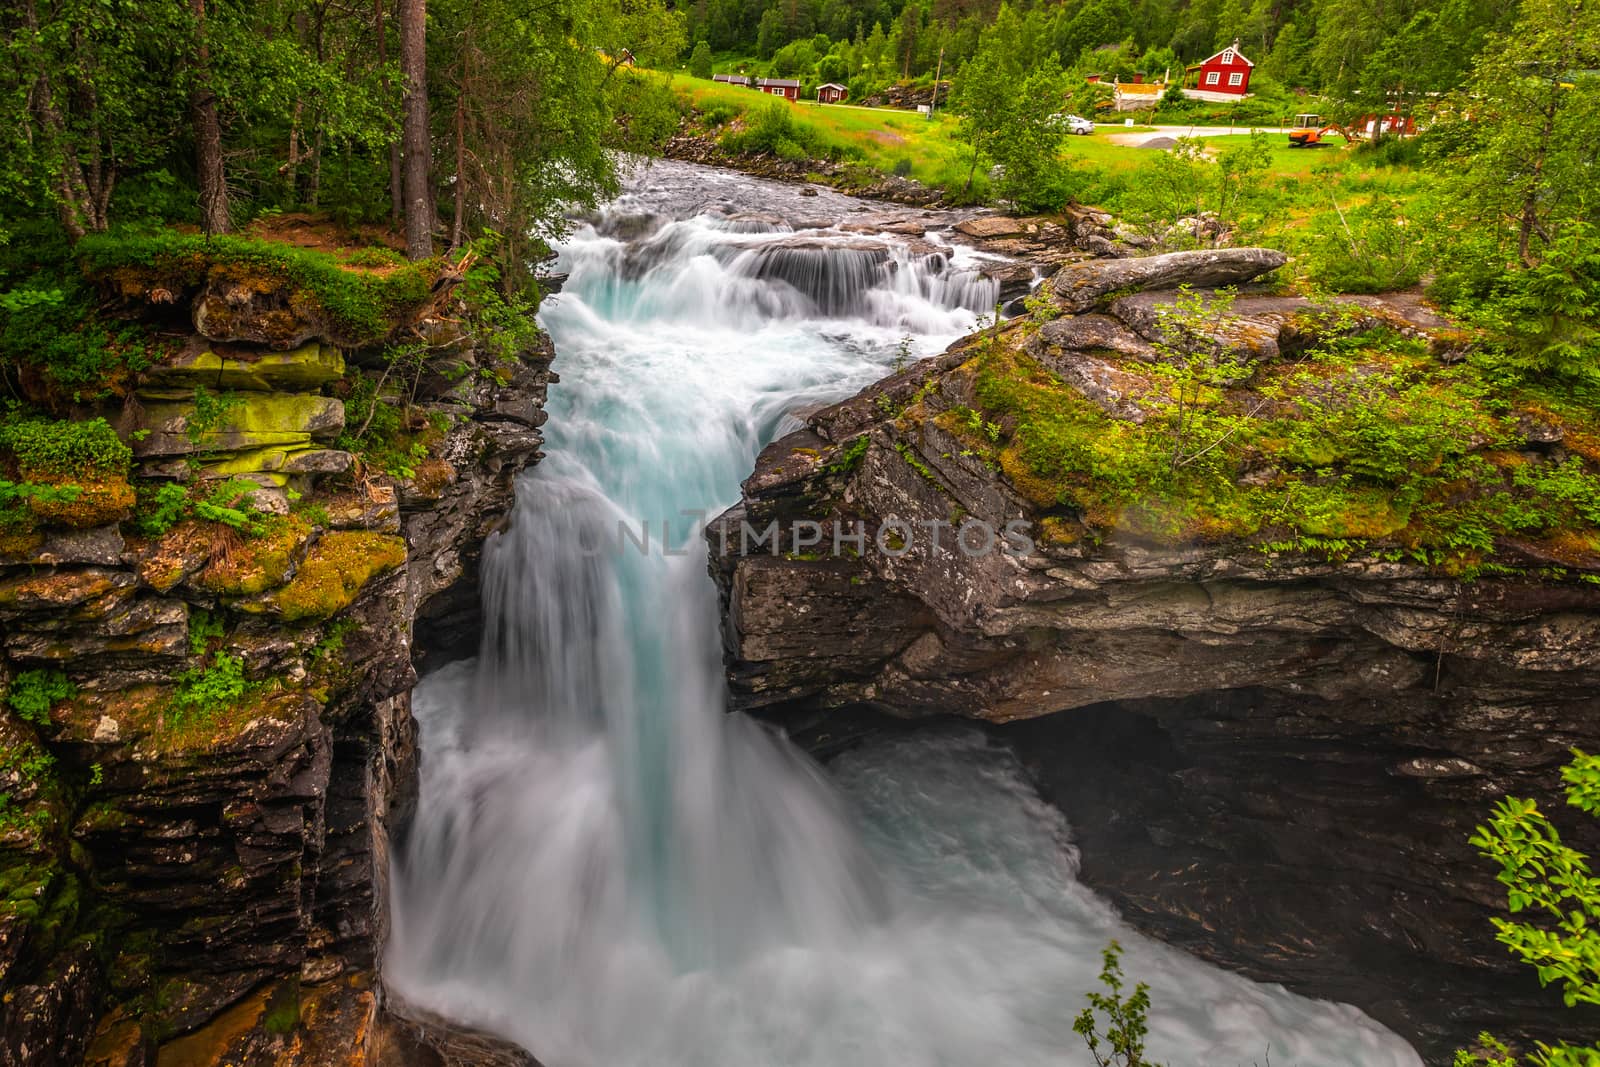 Gudbrandsjuvet ravine and Valldola river running through with waterfall, Valldal, Norway